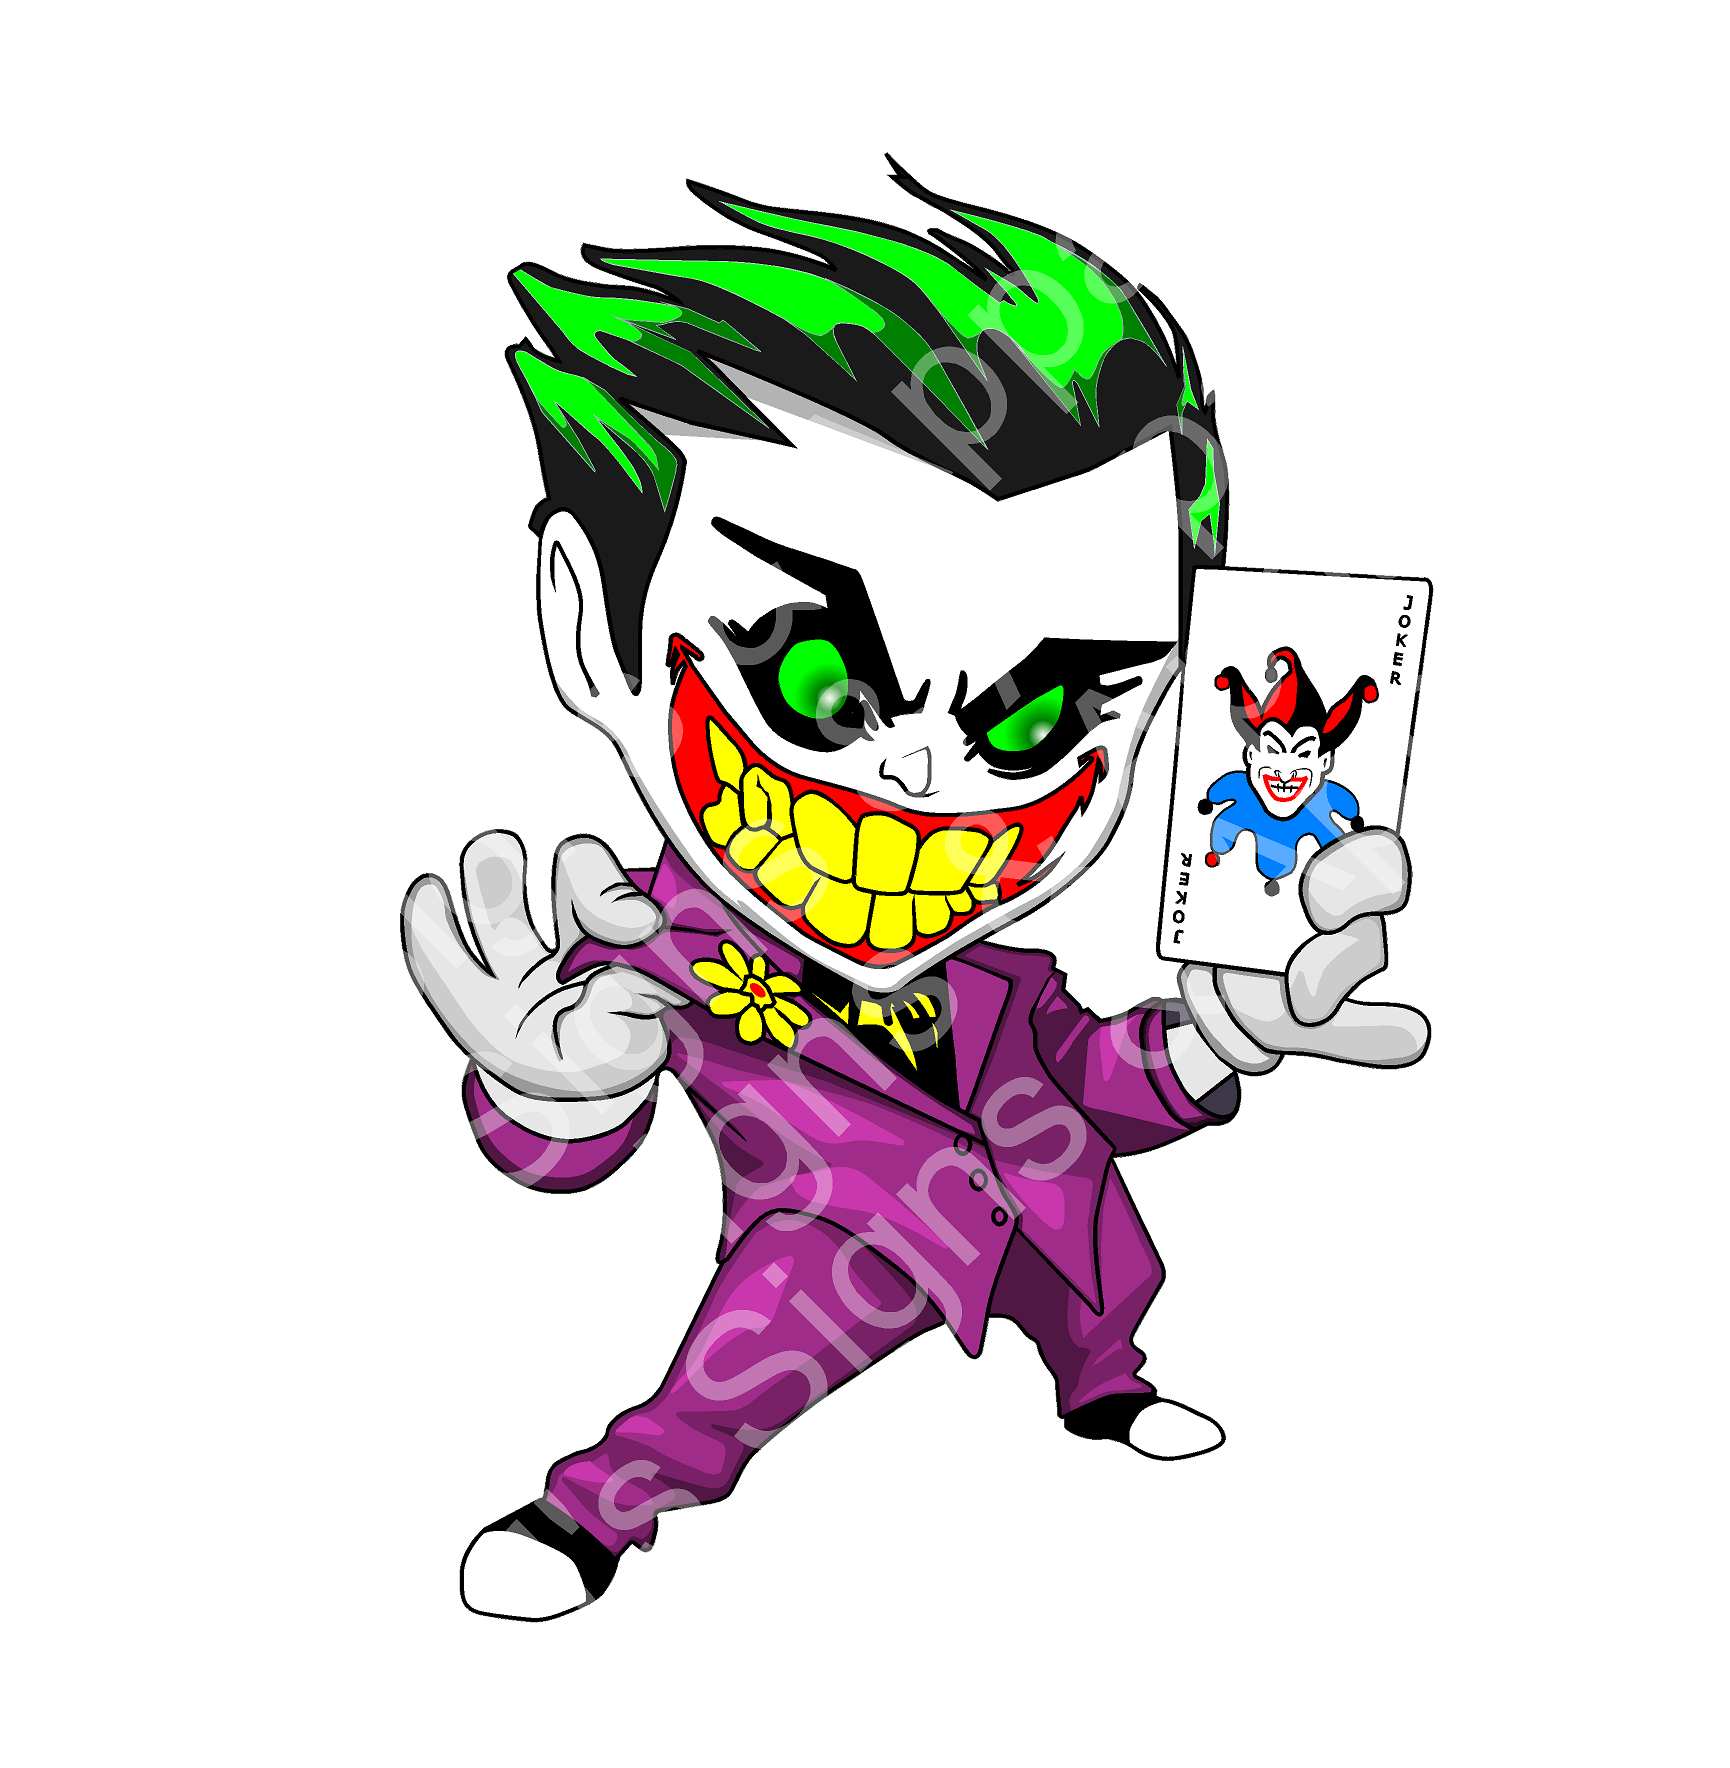 Joker Fan Art Vinyl Sticker Decal for Cars Trucks Vans Walls Laptop etc ...